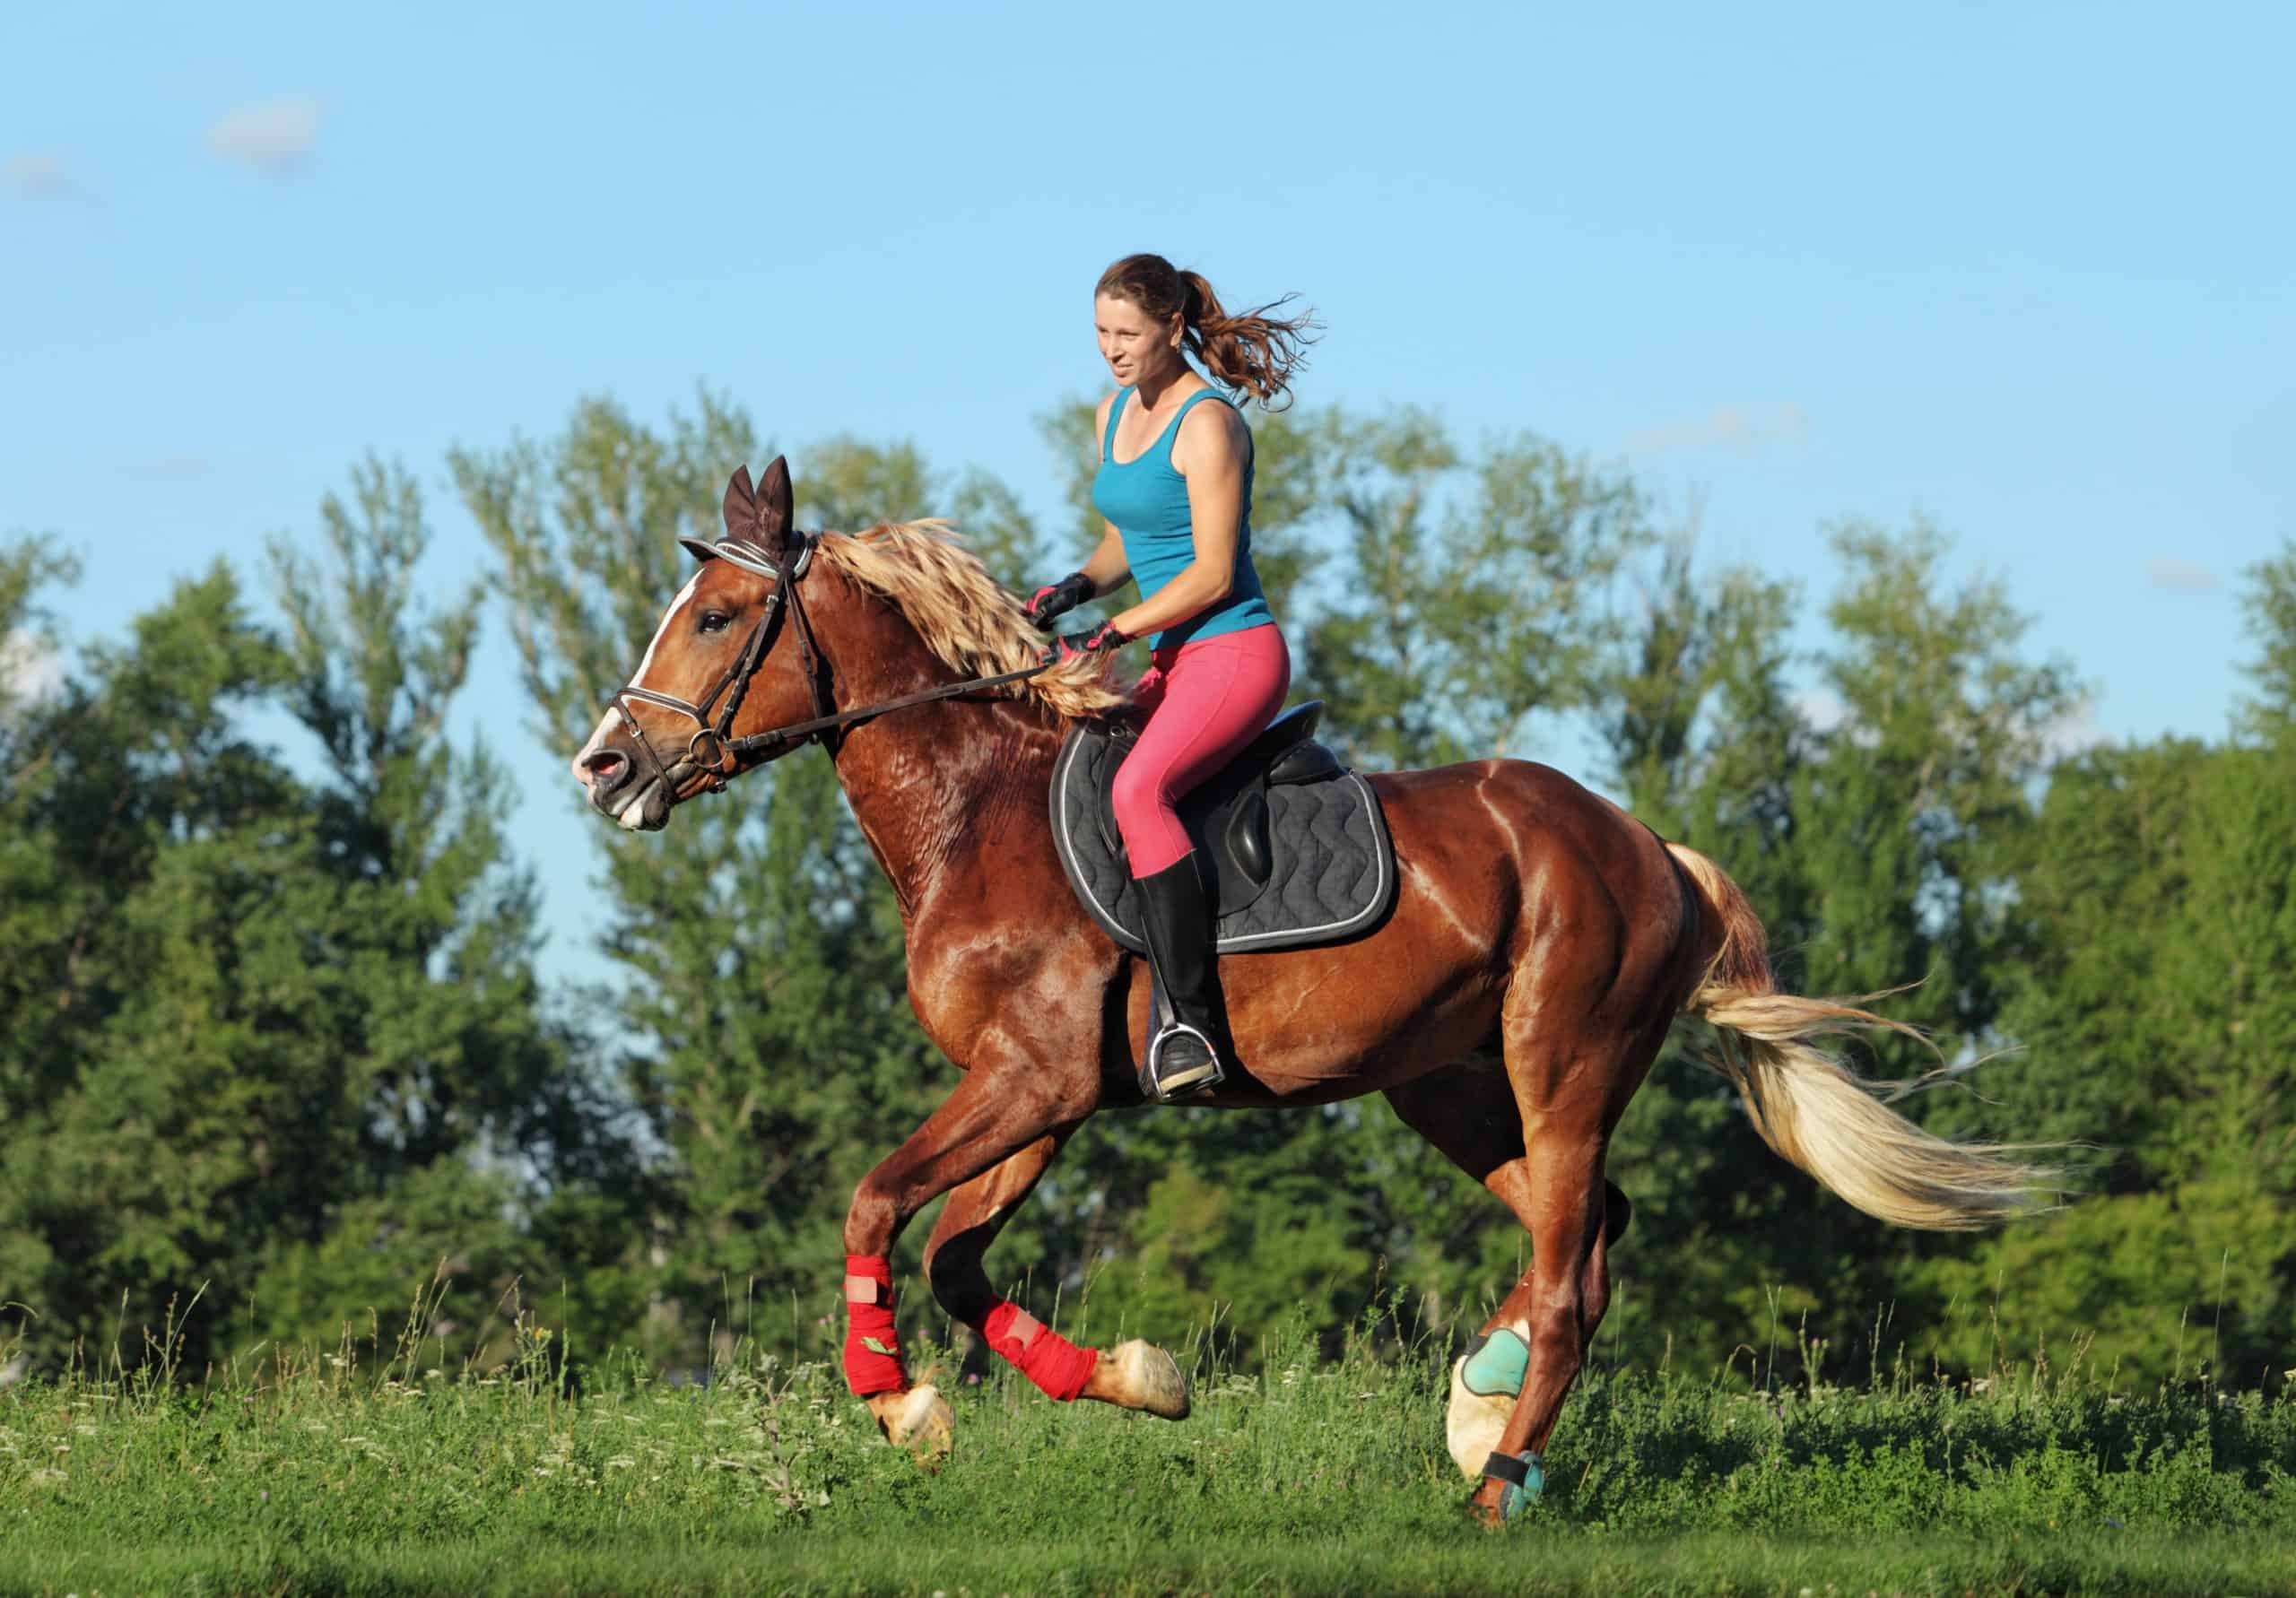 Groom girl on horseback riding through evening meadow